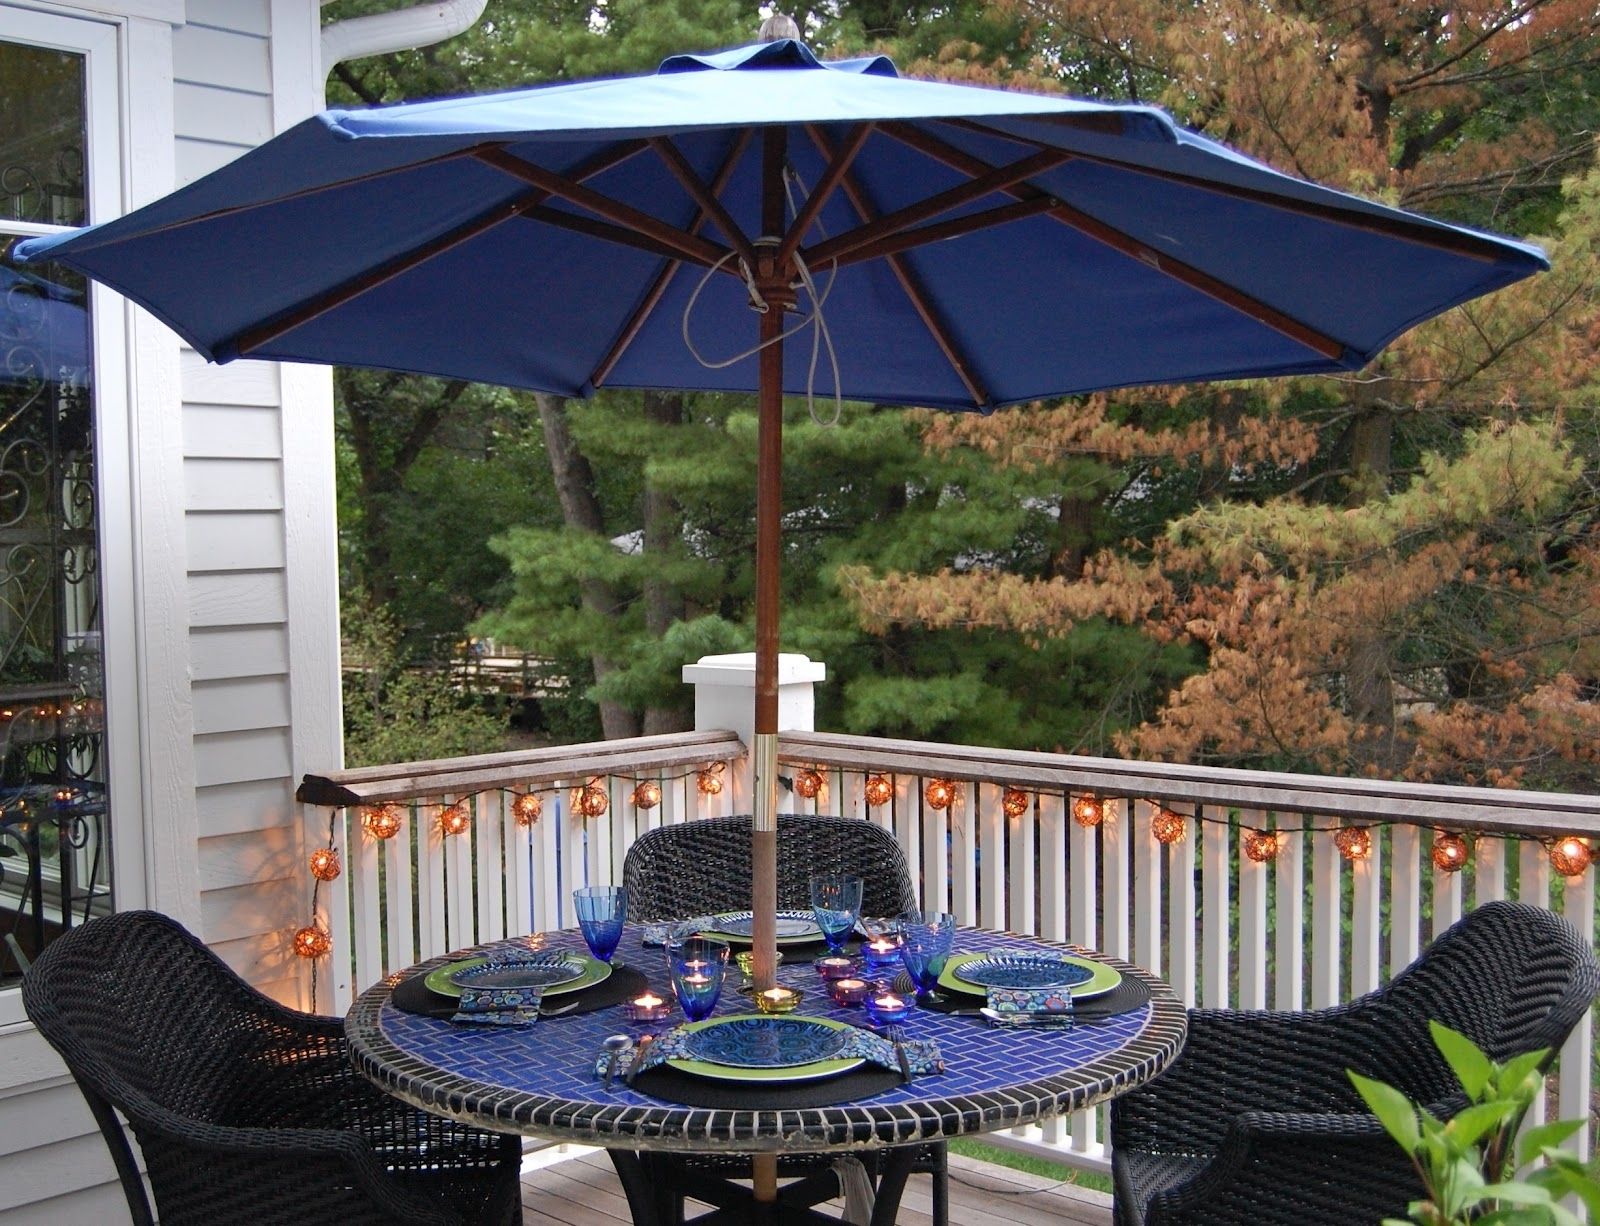 Patio Umbrellas For Tables Pertaining To 2019 Garden: Enchanting Outdoor Patio Decor Ideas With Patio Umbrellas (View 20 of 20)